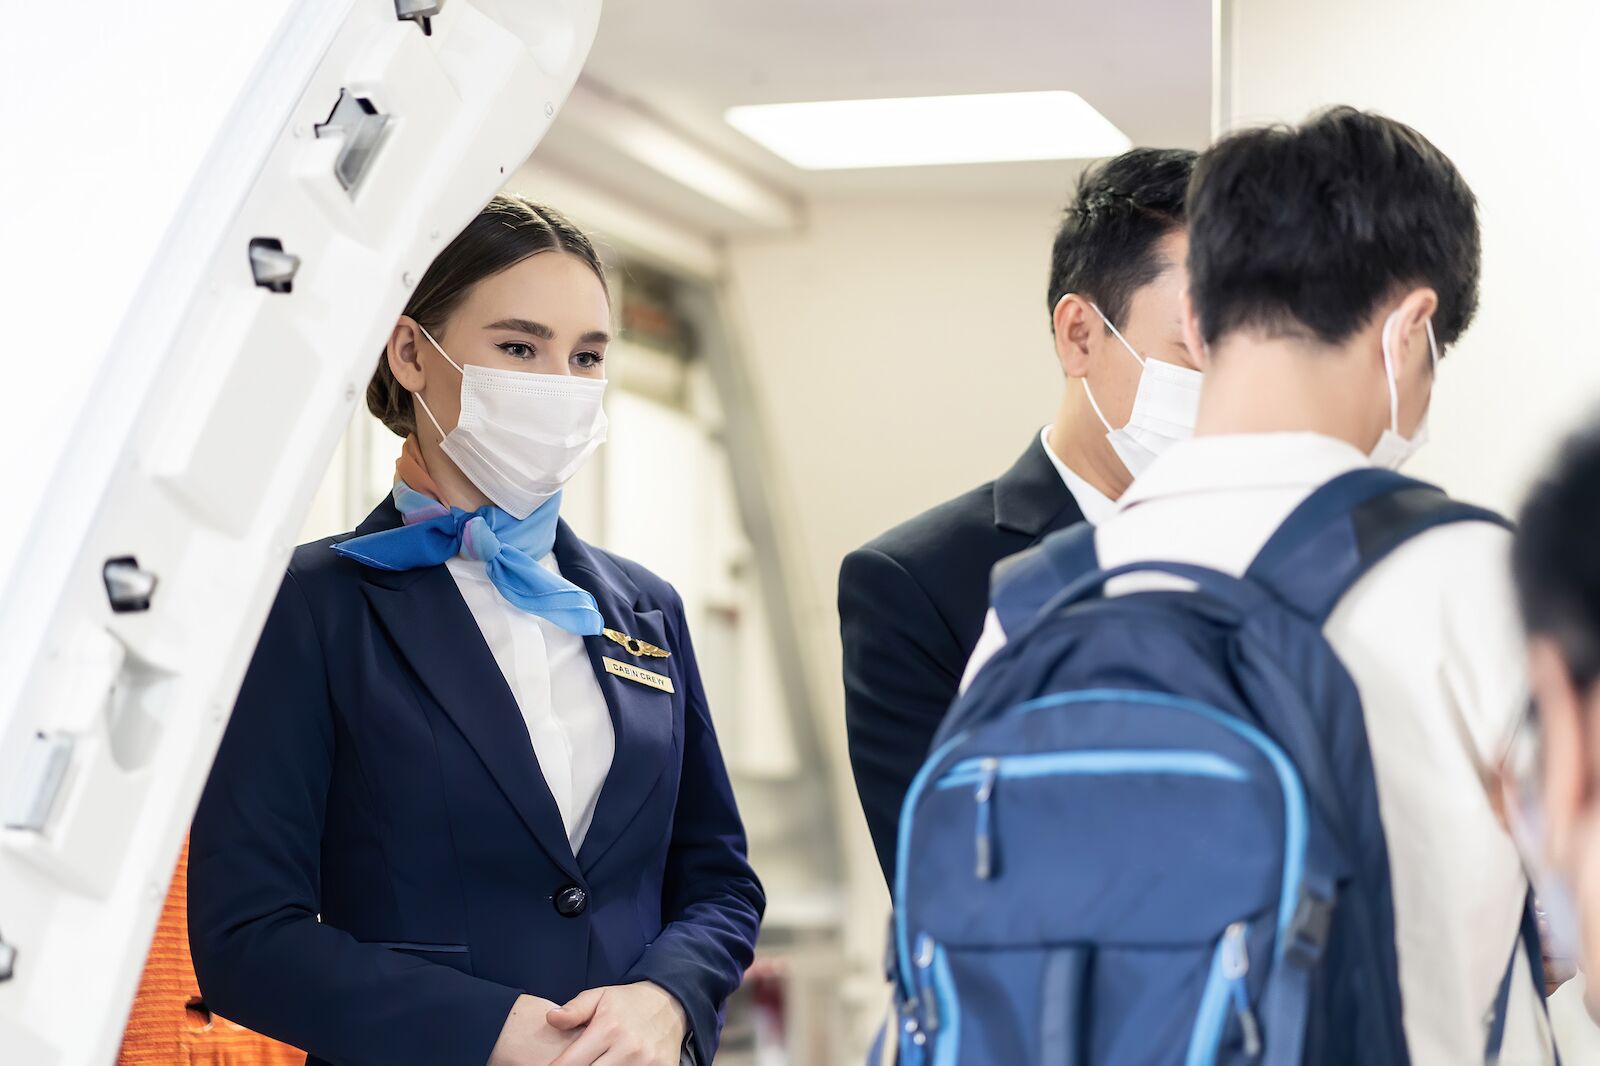 flight attendant helping passengers board